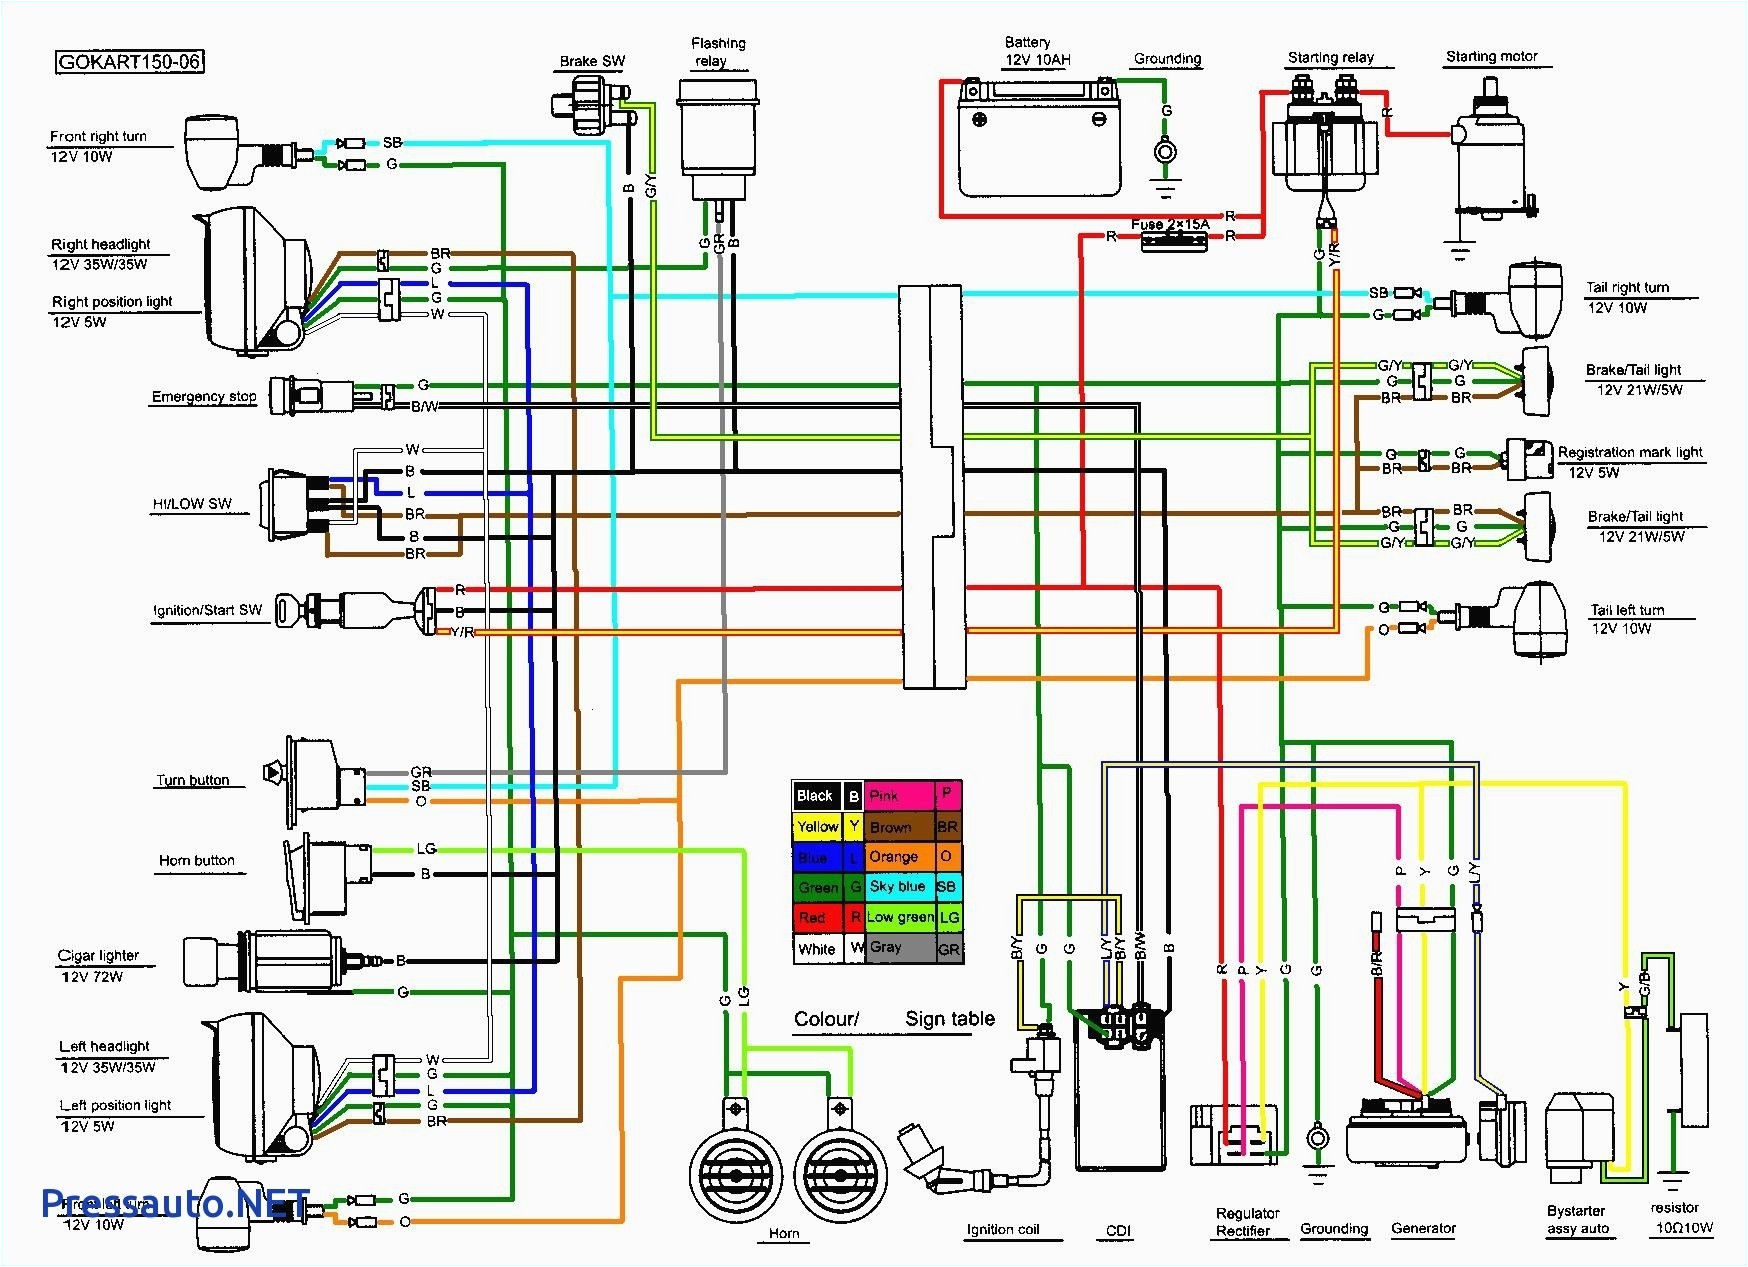 roketa 150cc wiring diagram wiring diagram user roketa 150cc atv wiring diagram roketa 150cc wiring diagram